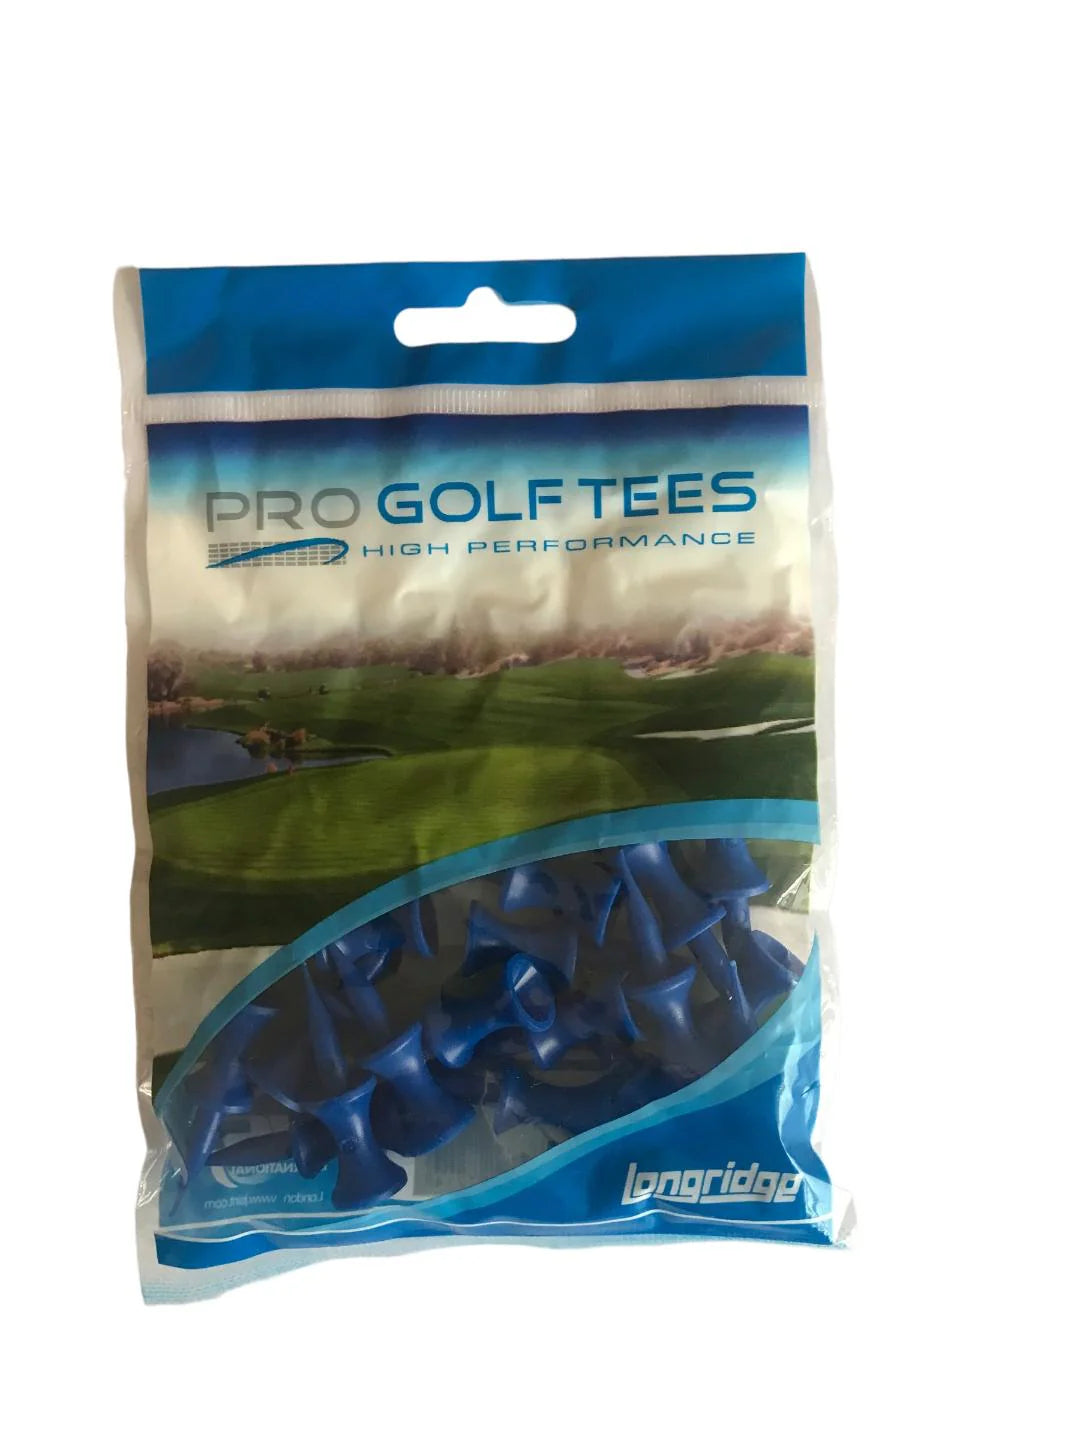 Pro Golf Tee 17mm